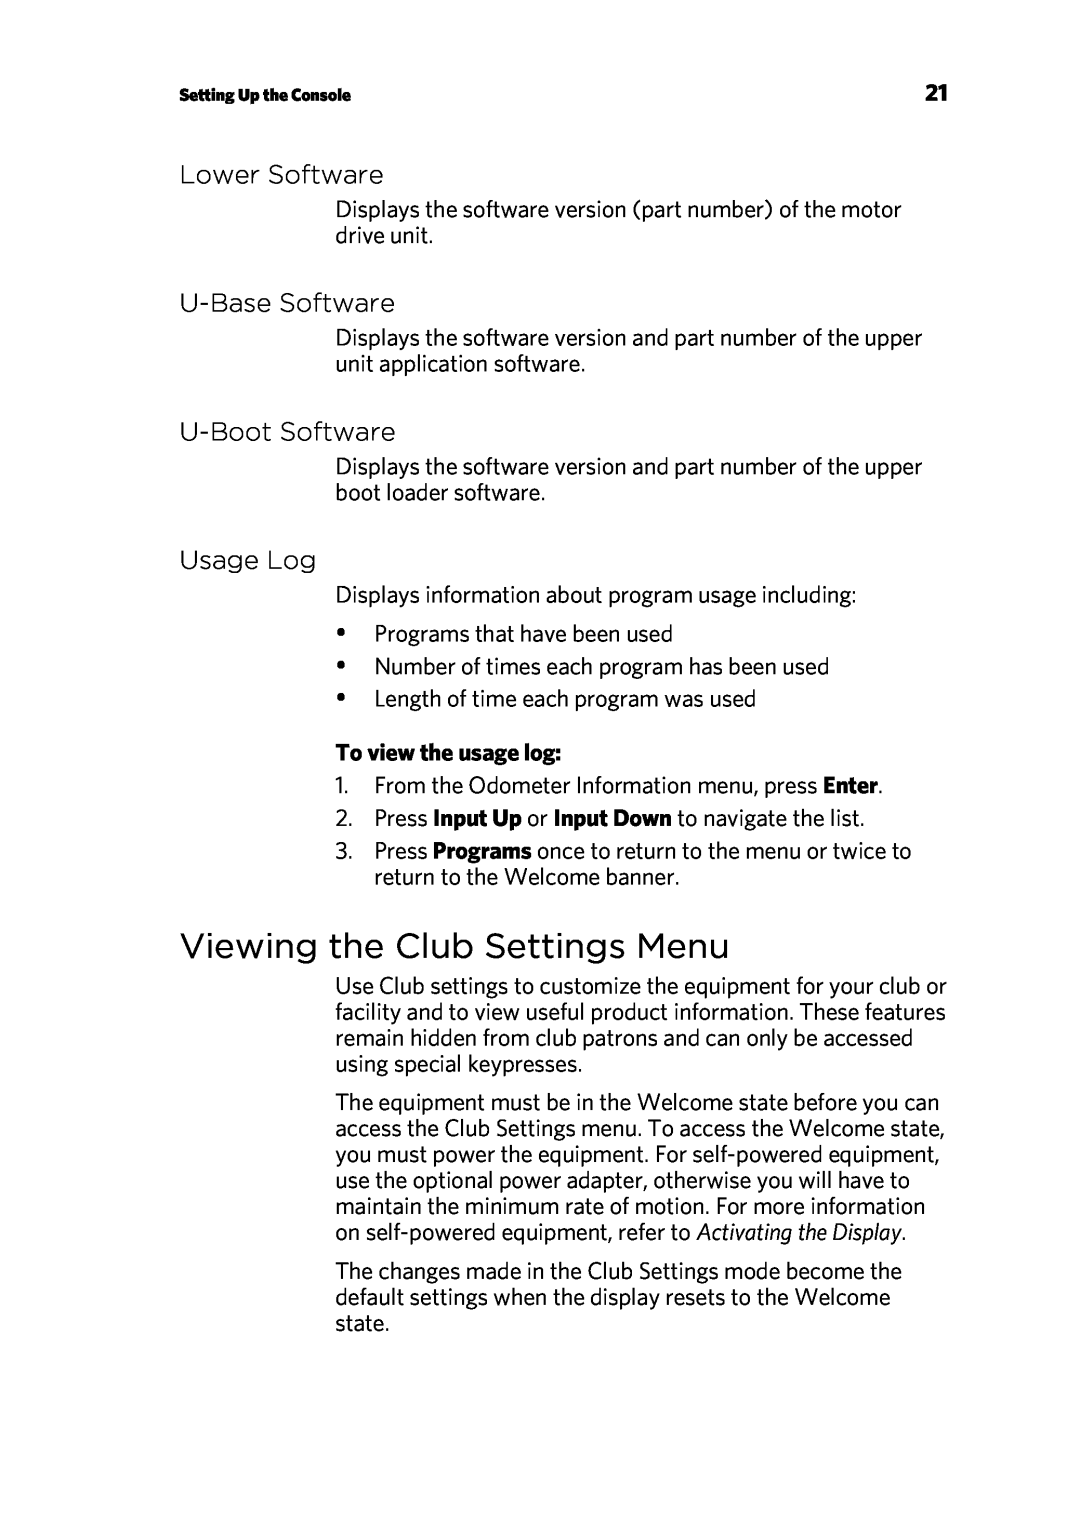 Precor 300753-201 manual Viewing the Club Settings Menu, Lower Software, U-Base Software, U-Boot Software, Usage Log 